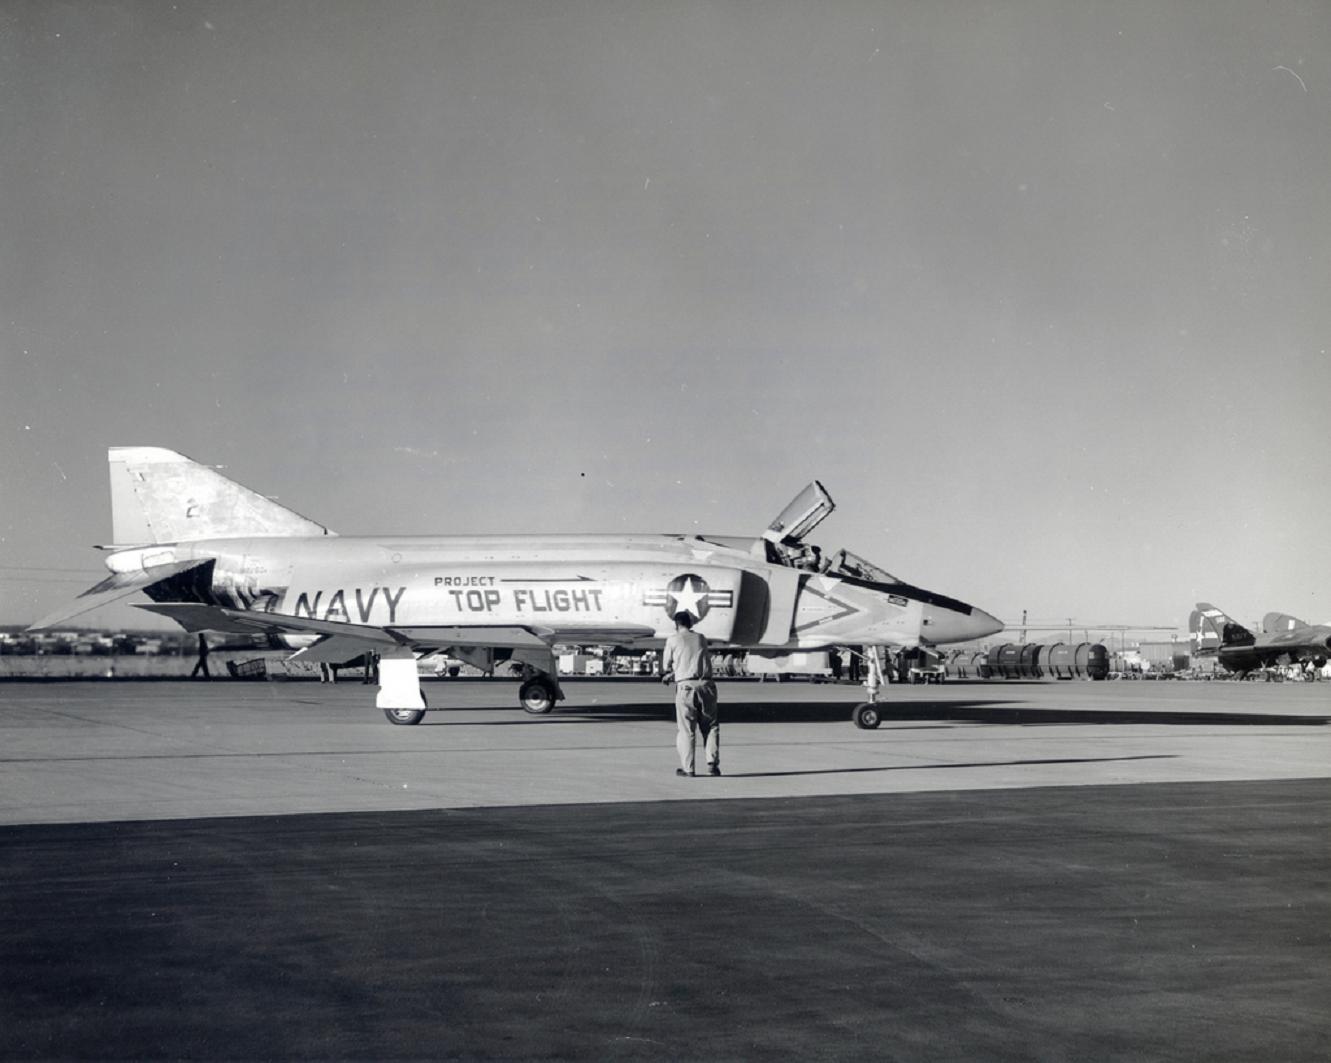 McDonnell YF4H-1 Phantom II, Bu. No. 142260, taxiing at Edwards Air Force Base, 6 December 1959. (U.S. Navy)